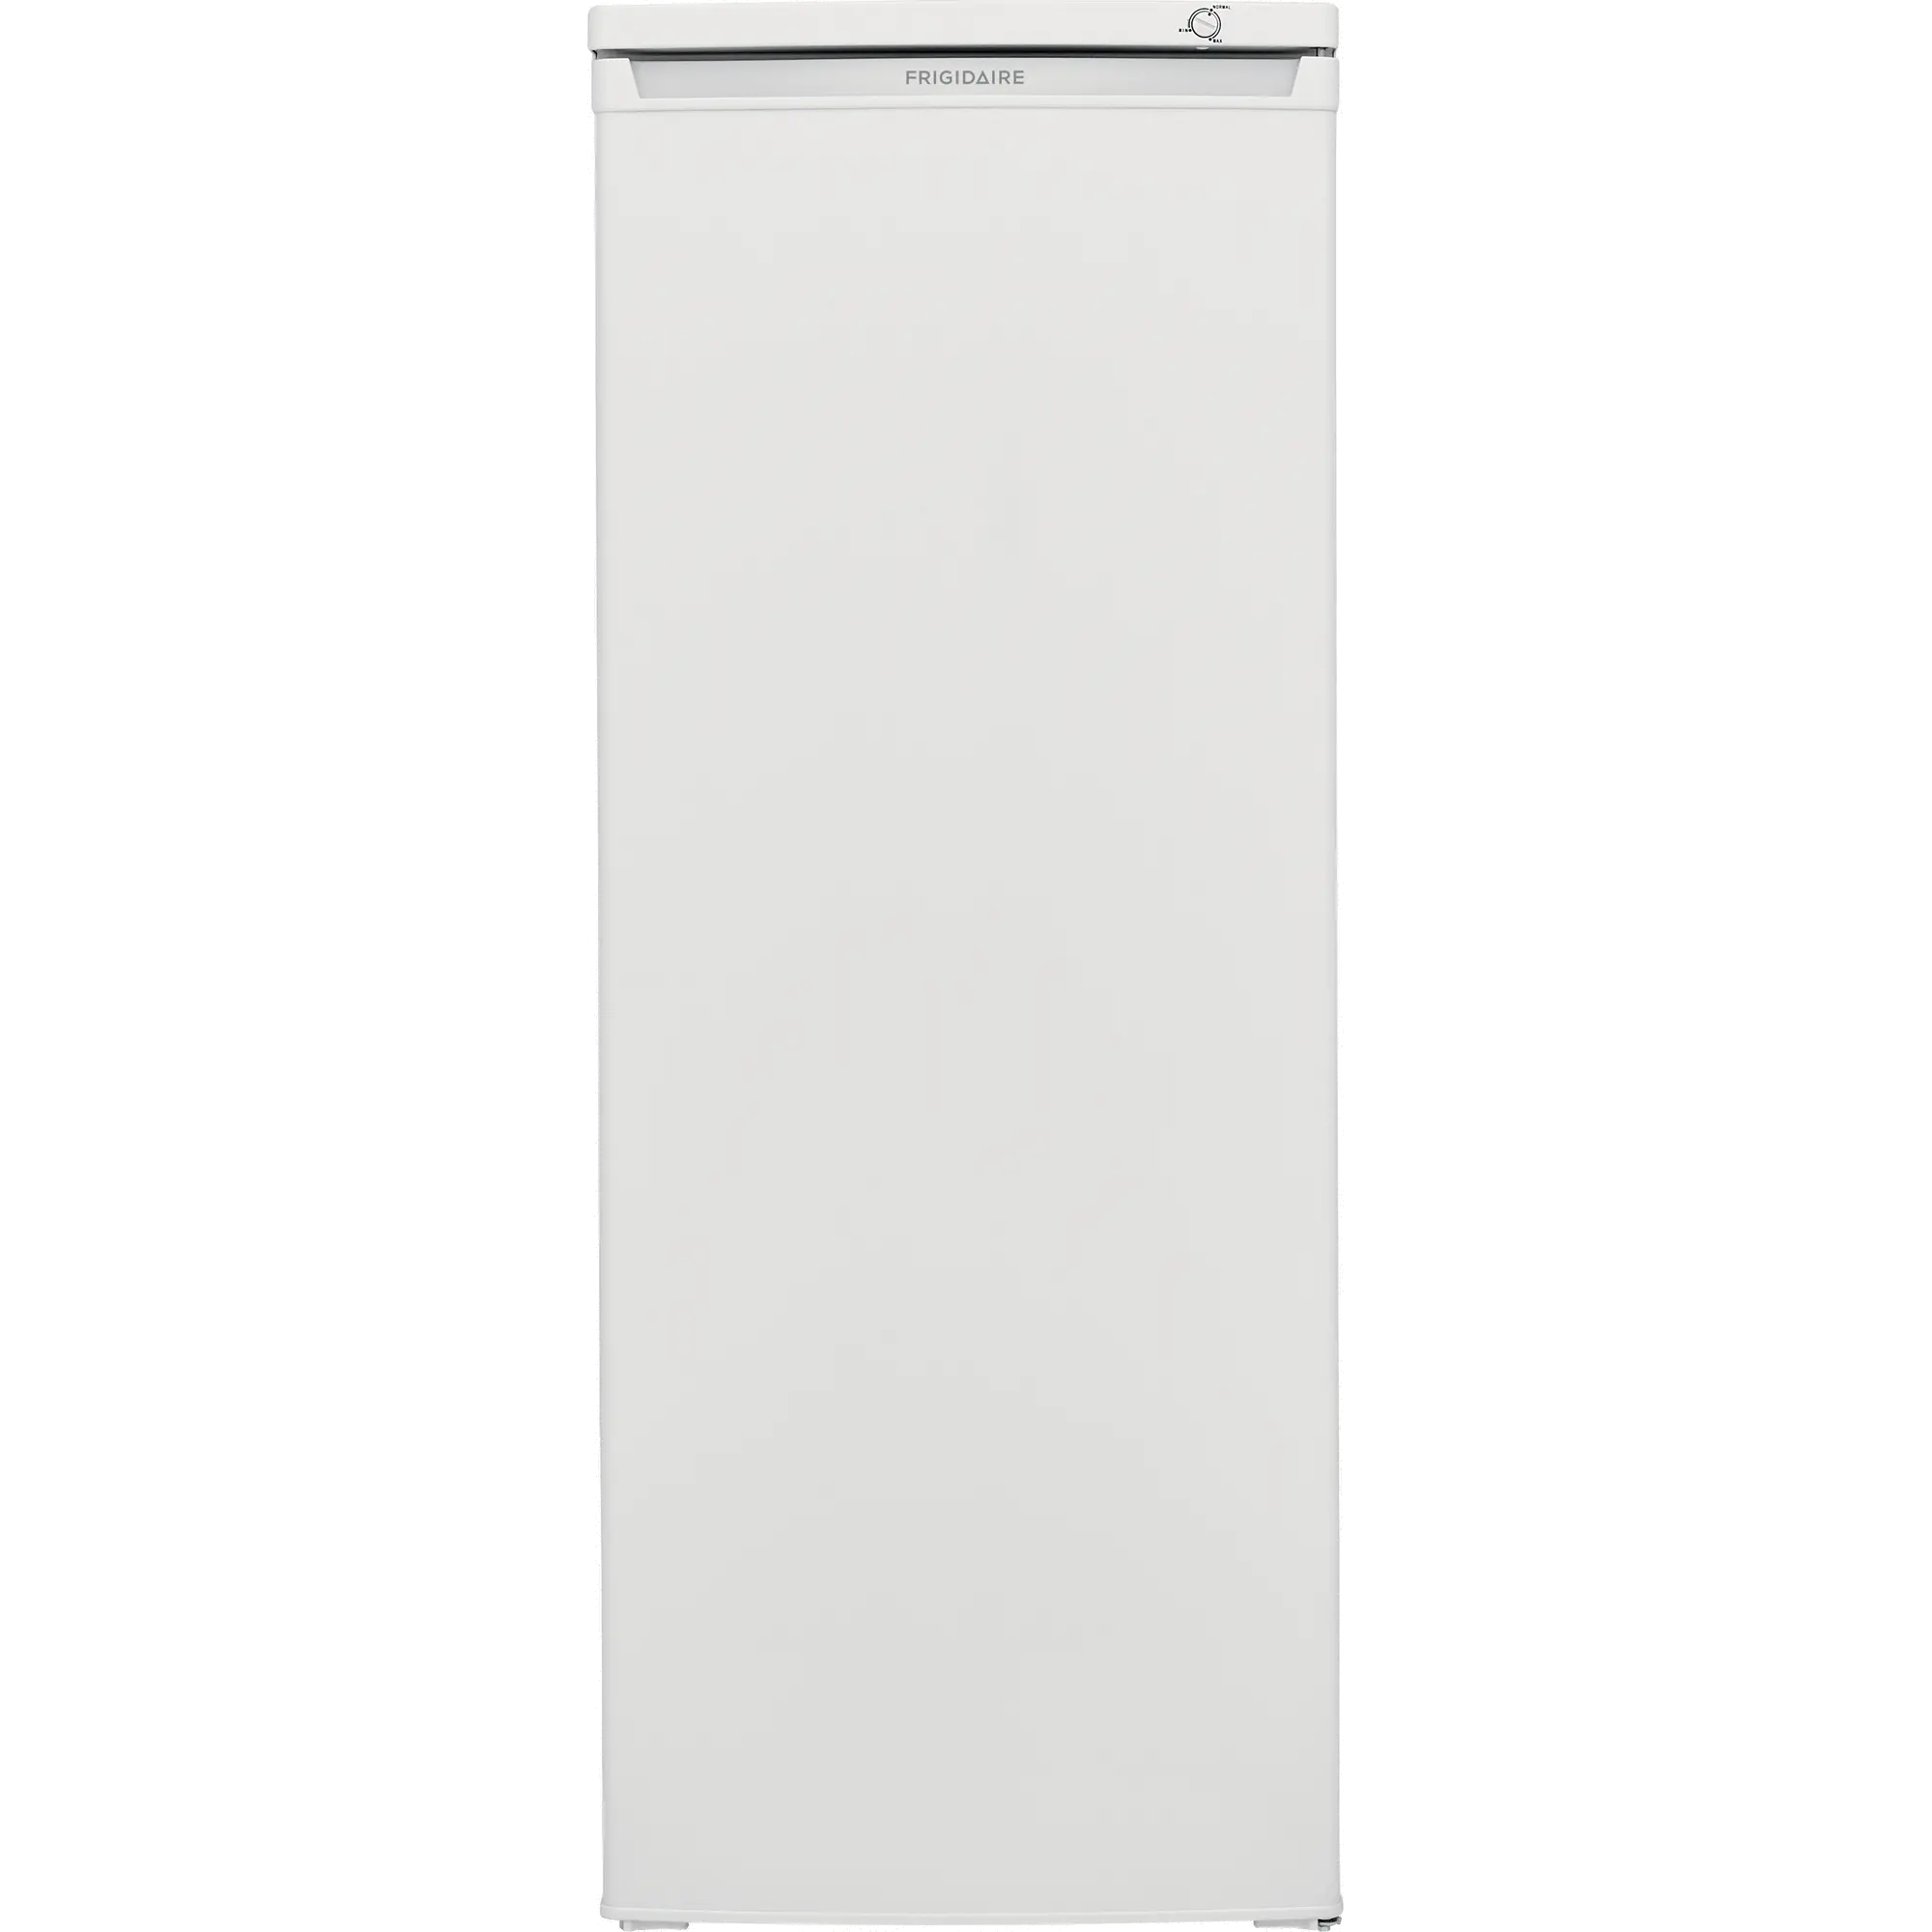 FFUM0623AW Frigidaire 5.8 cu ft Upright Freezer - White-1